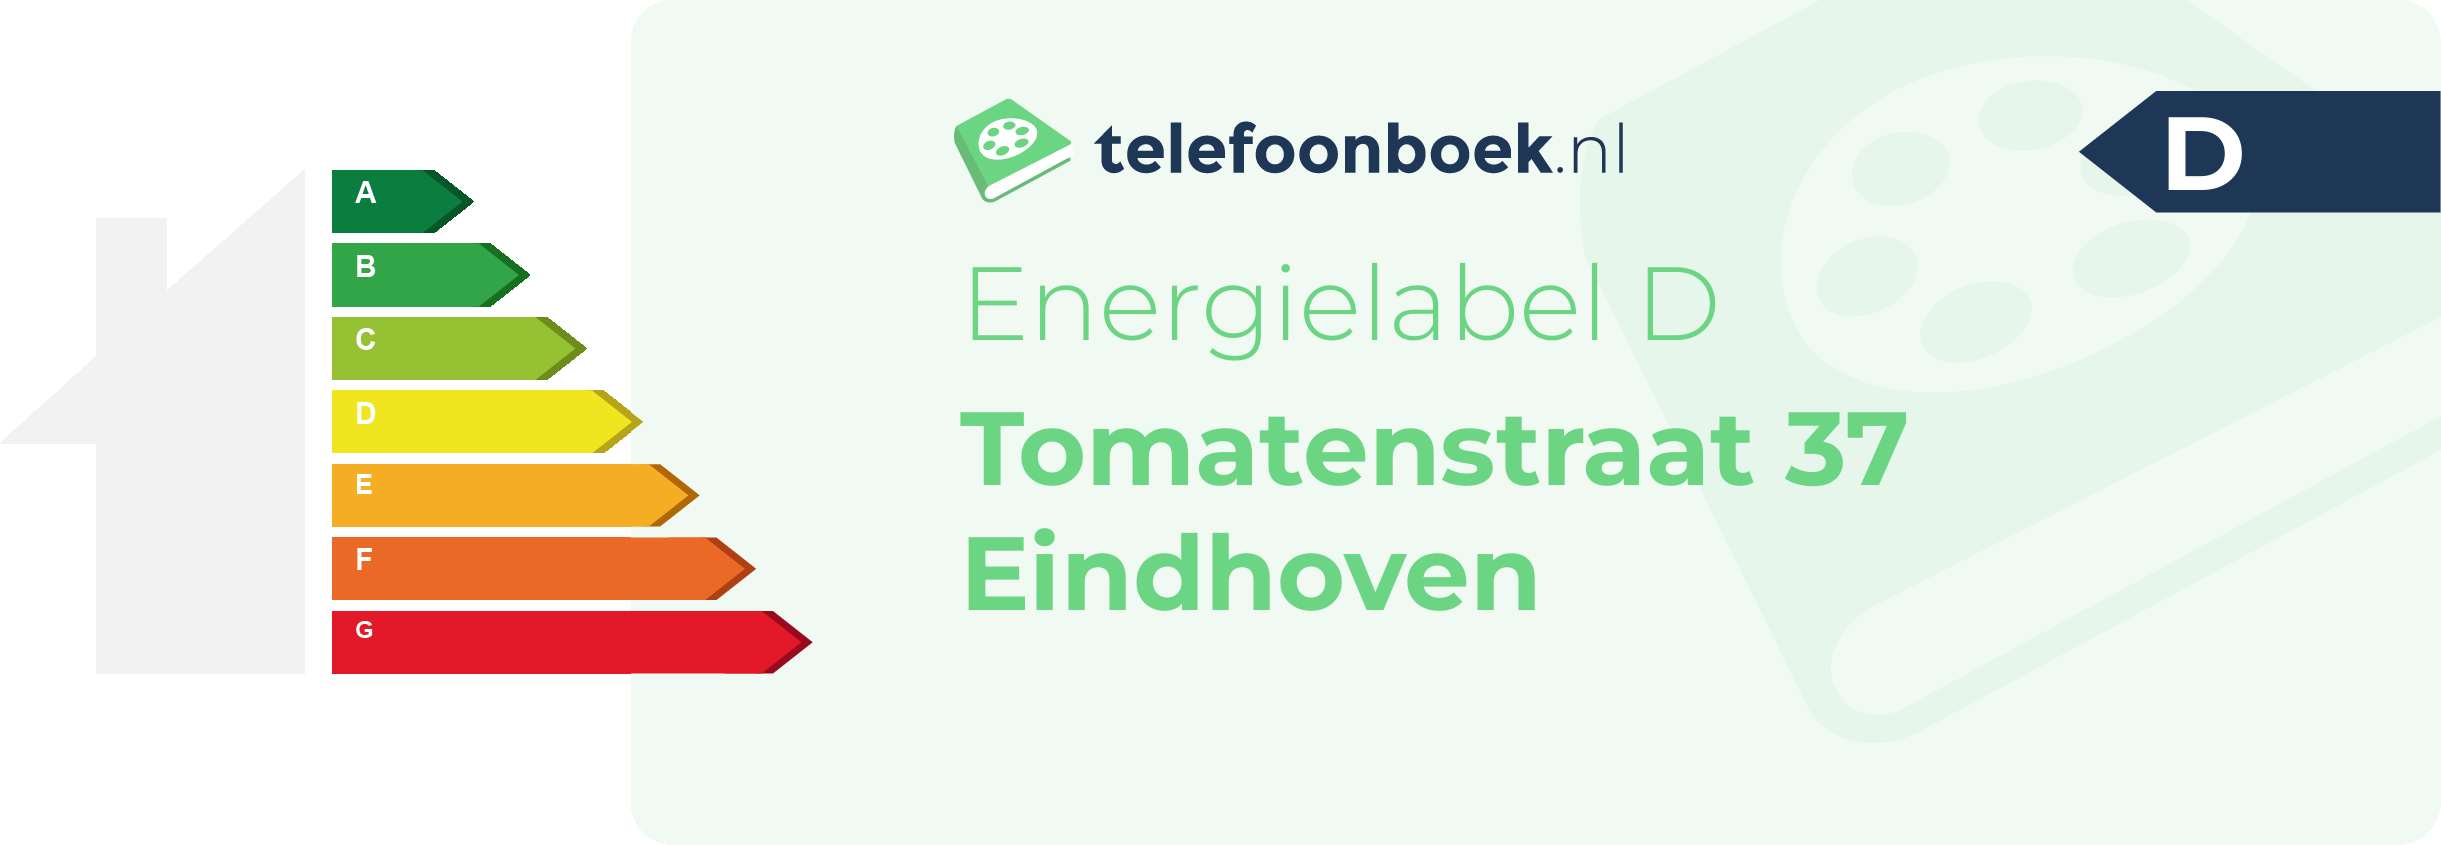 Energielabel Tomatenstraat 37 Eindhoven